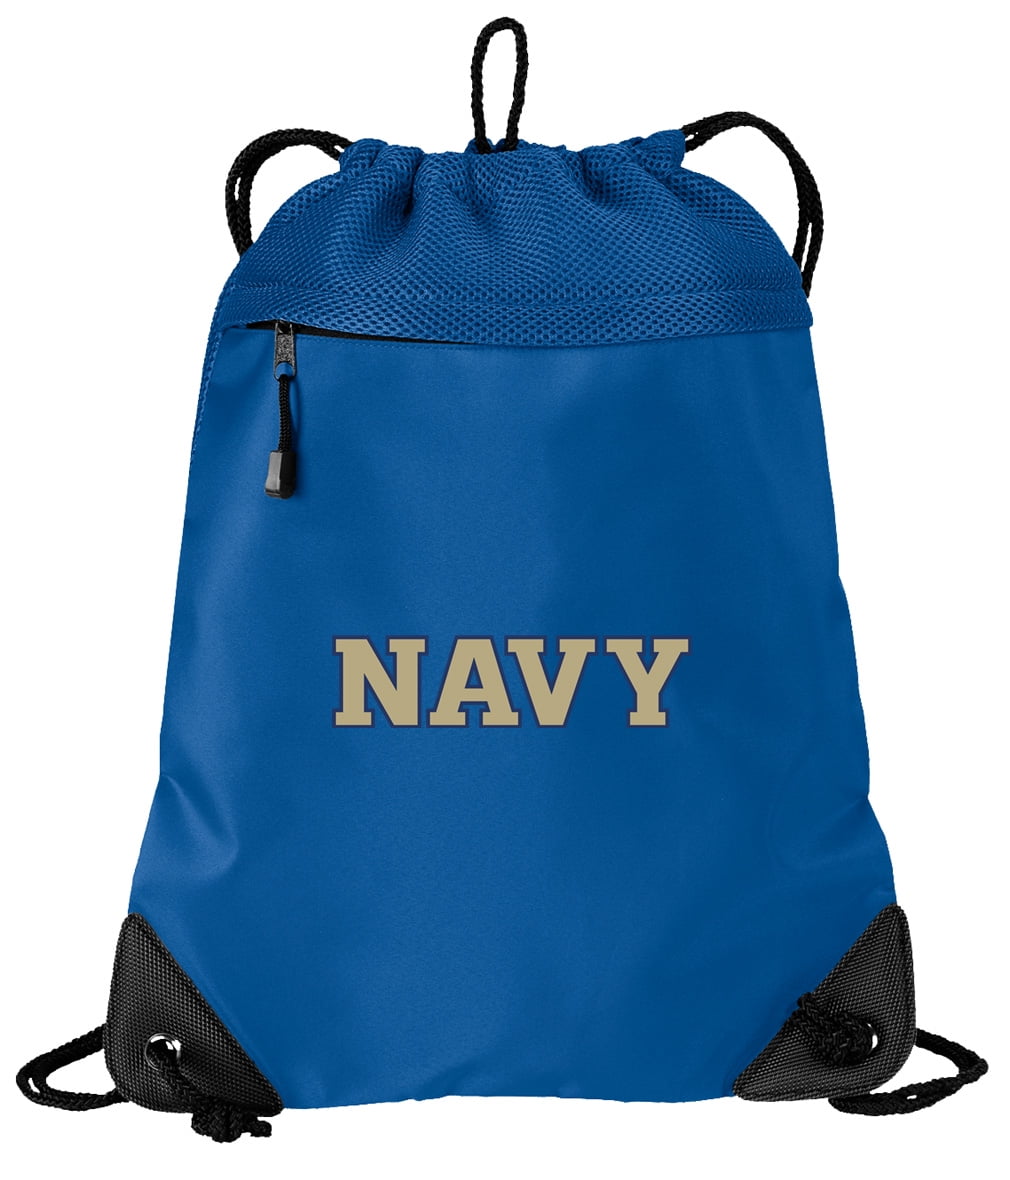 USNA Navy Drawstring Bag Naval Academy Cinch Backpack UNIQUE MESH & MICROFIBER